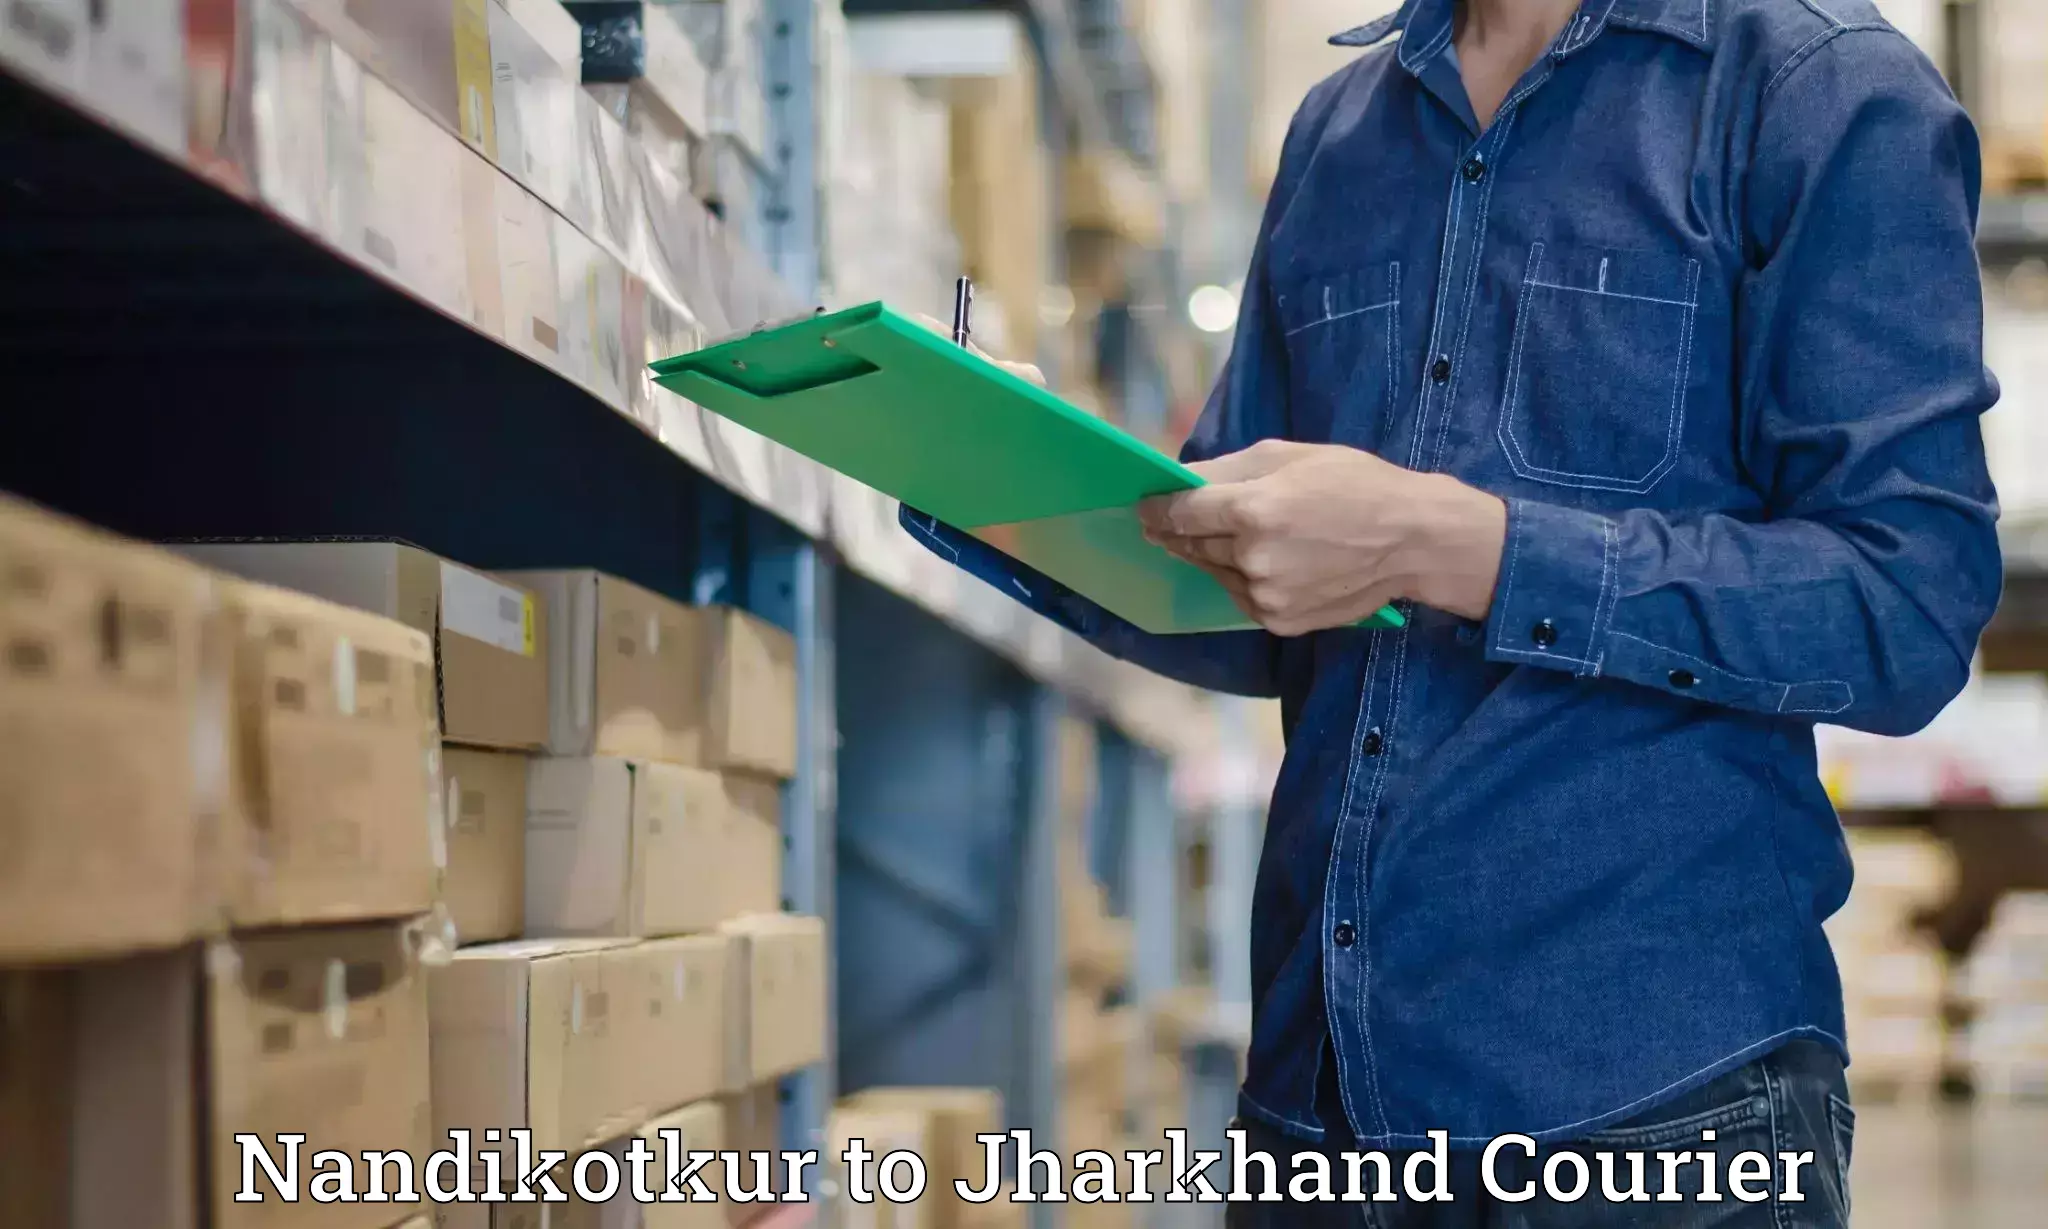 International courier networks Nandikotkur to Jharkhand